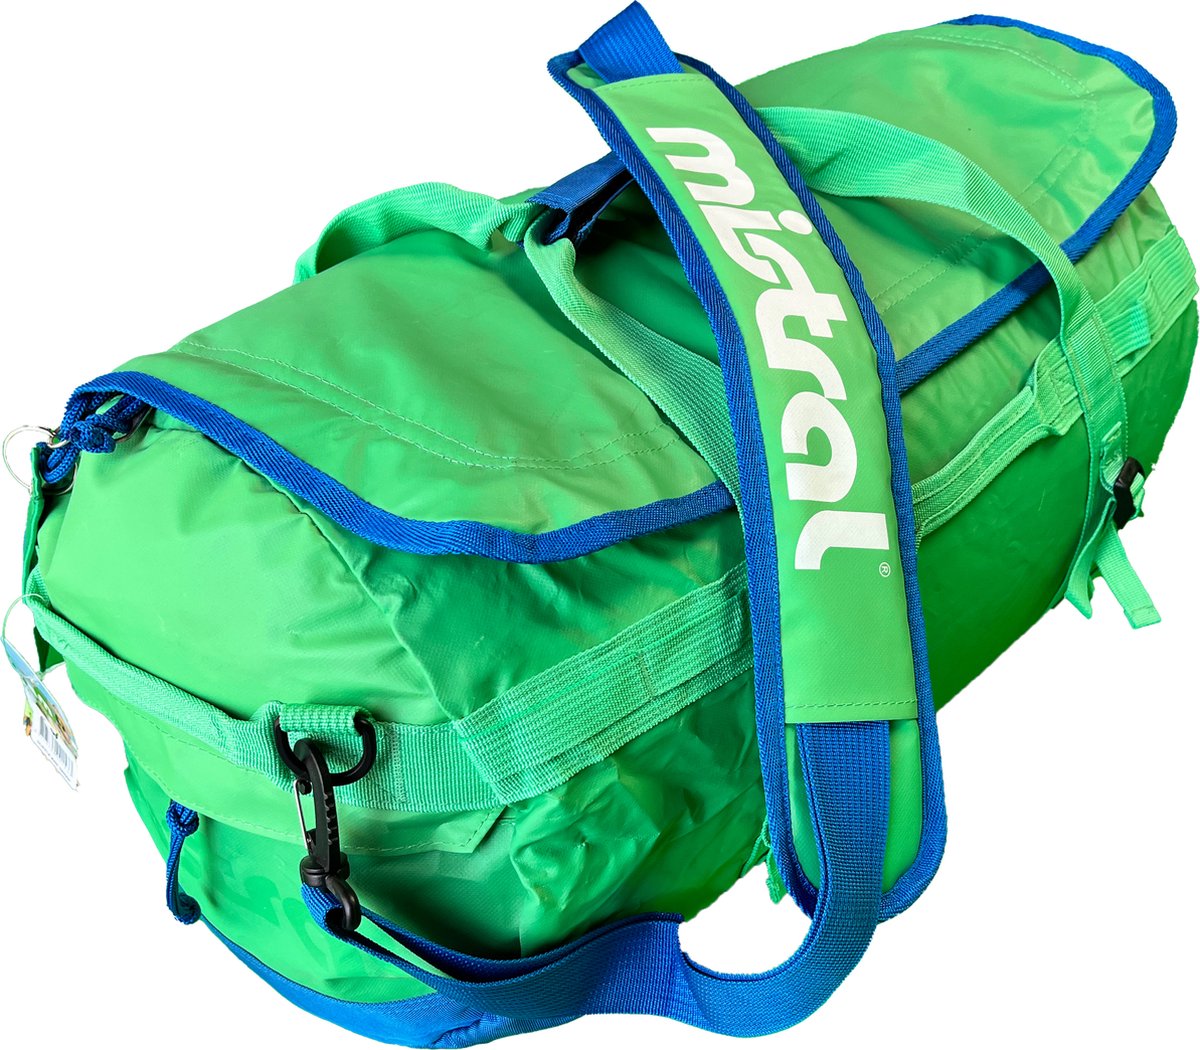 Mistral Reistas Sporttas - Expeditie duffel bag - 65 liter - Waterbestendig – duffle bag - groen